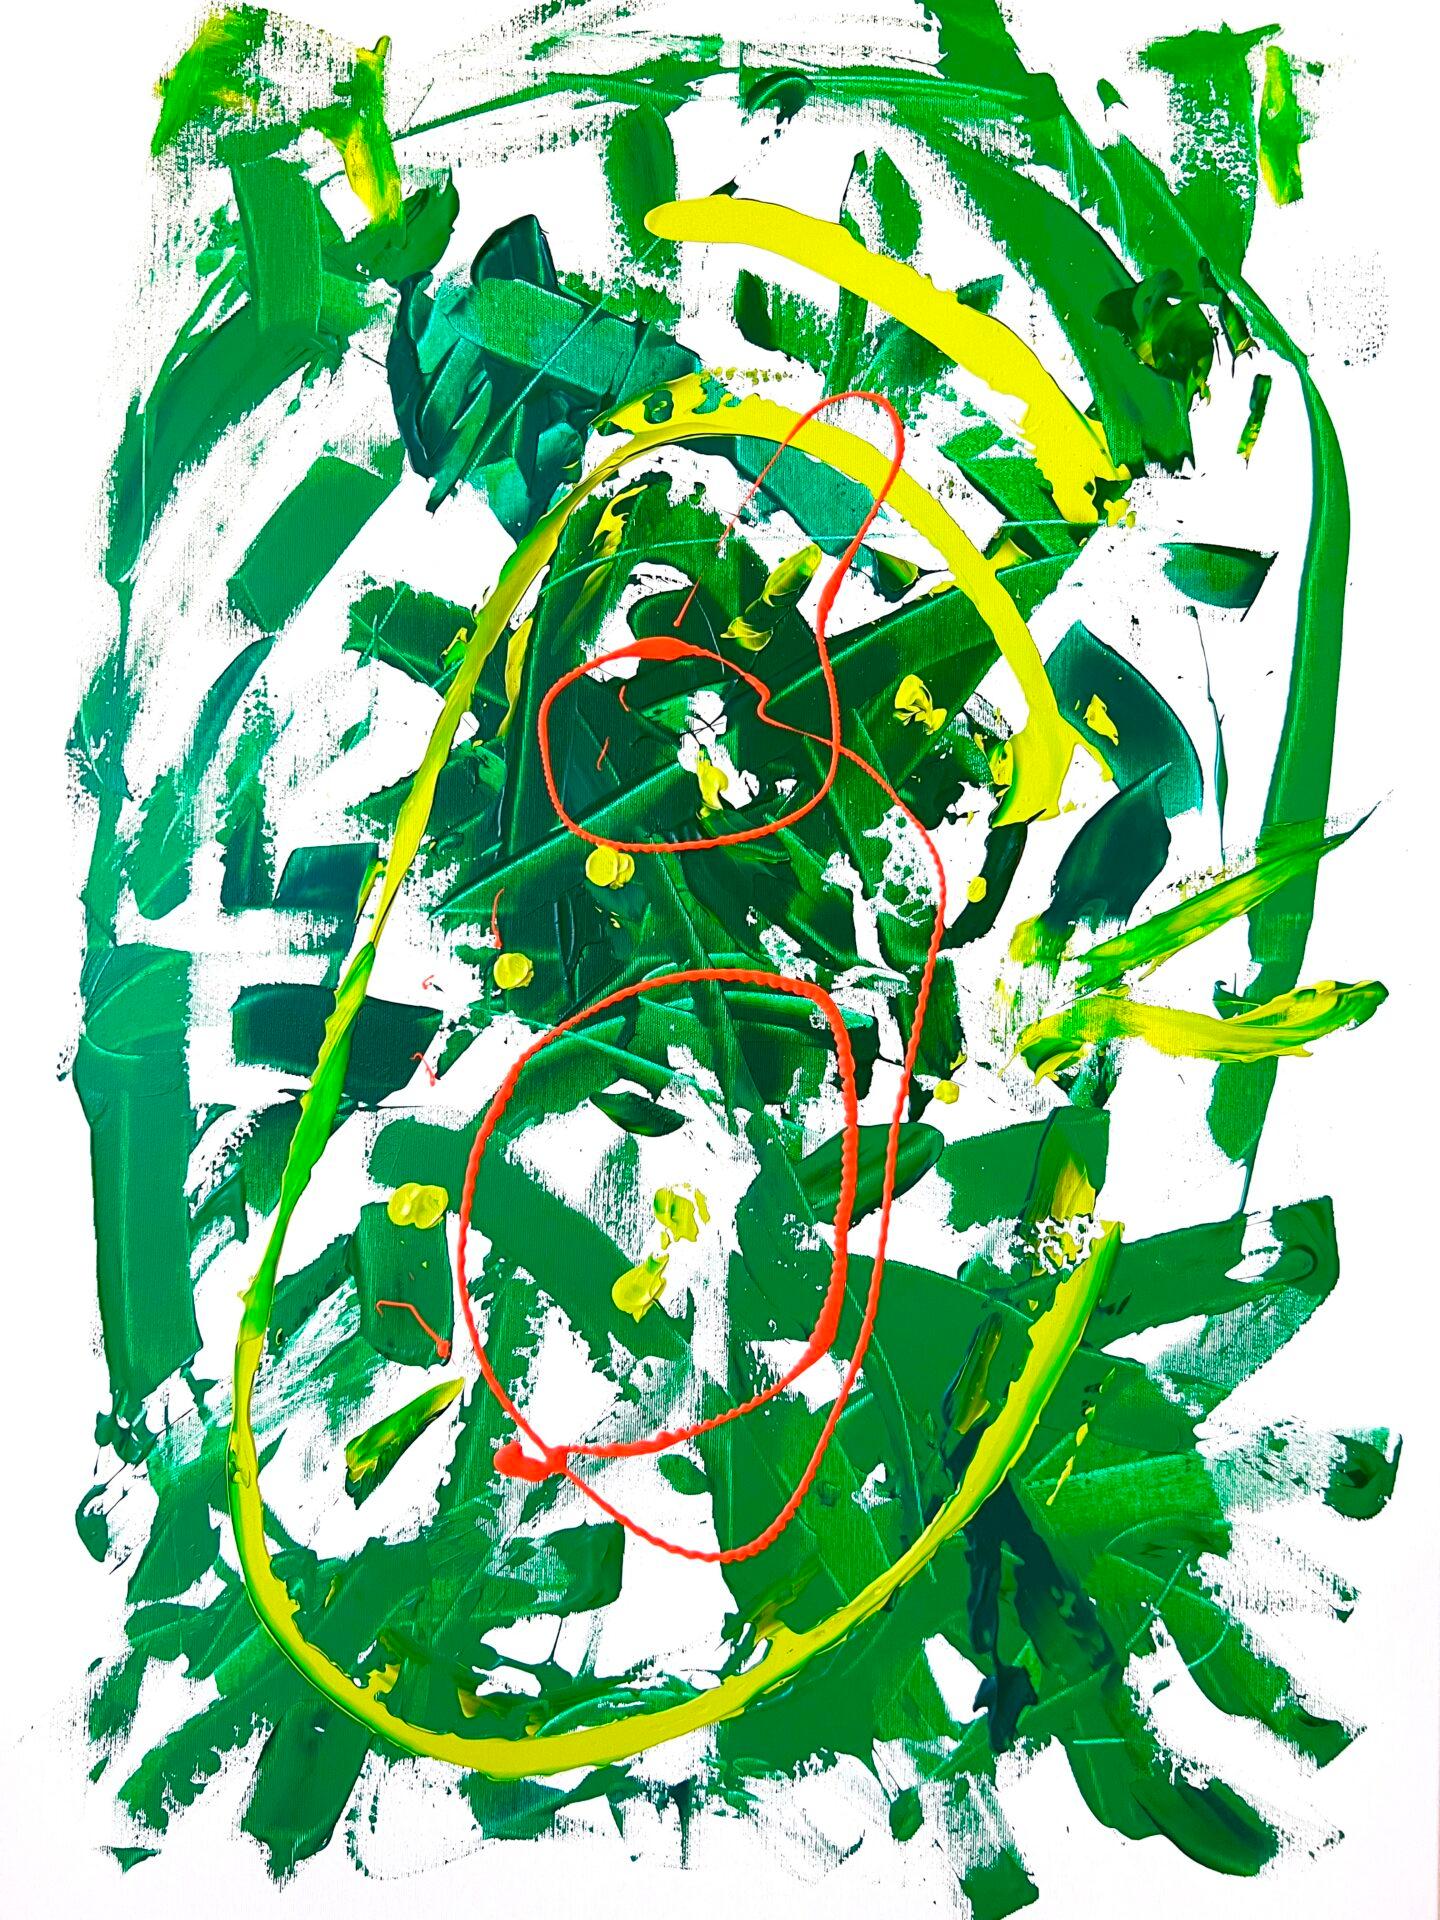 Lost in Green - Painting by Ewa Kulbacka